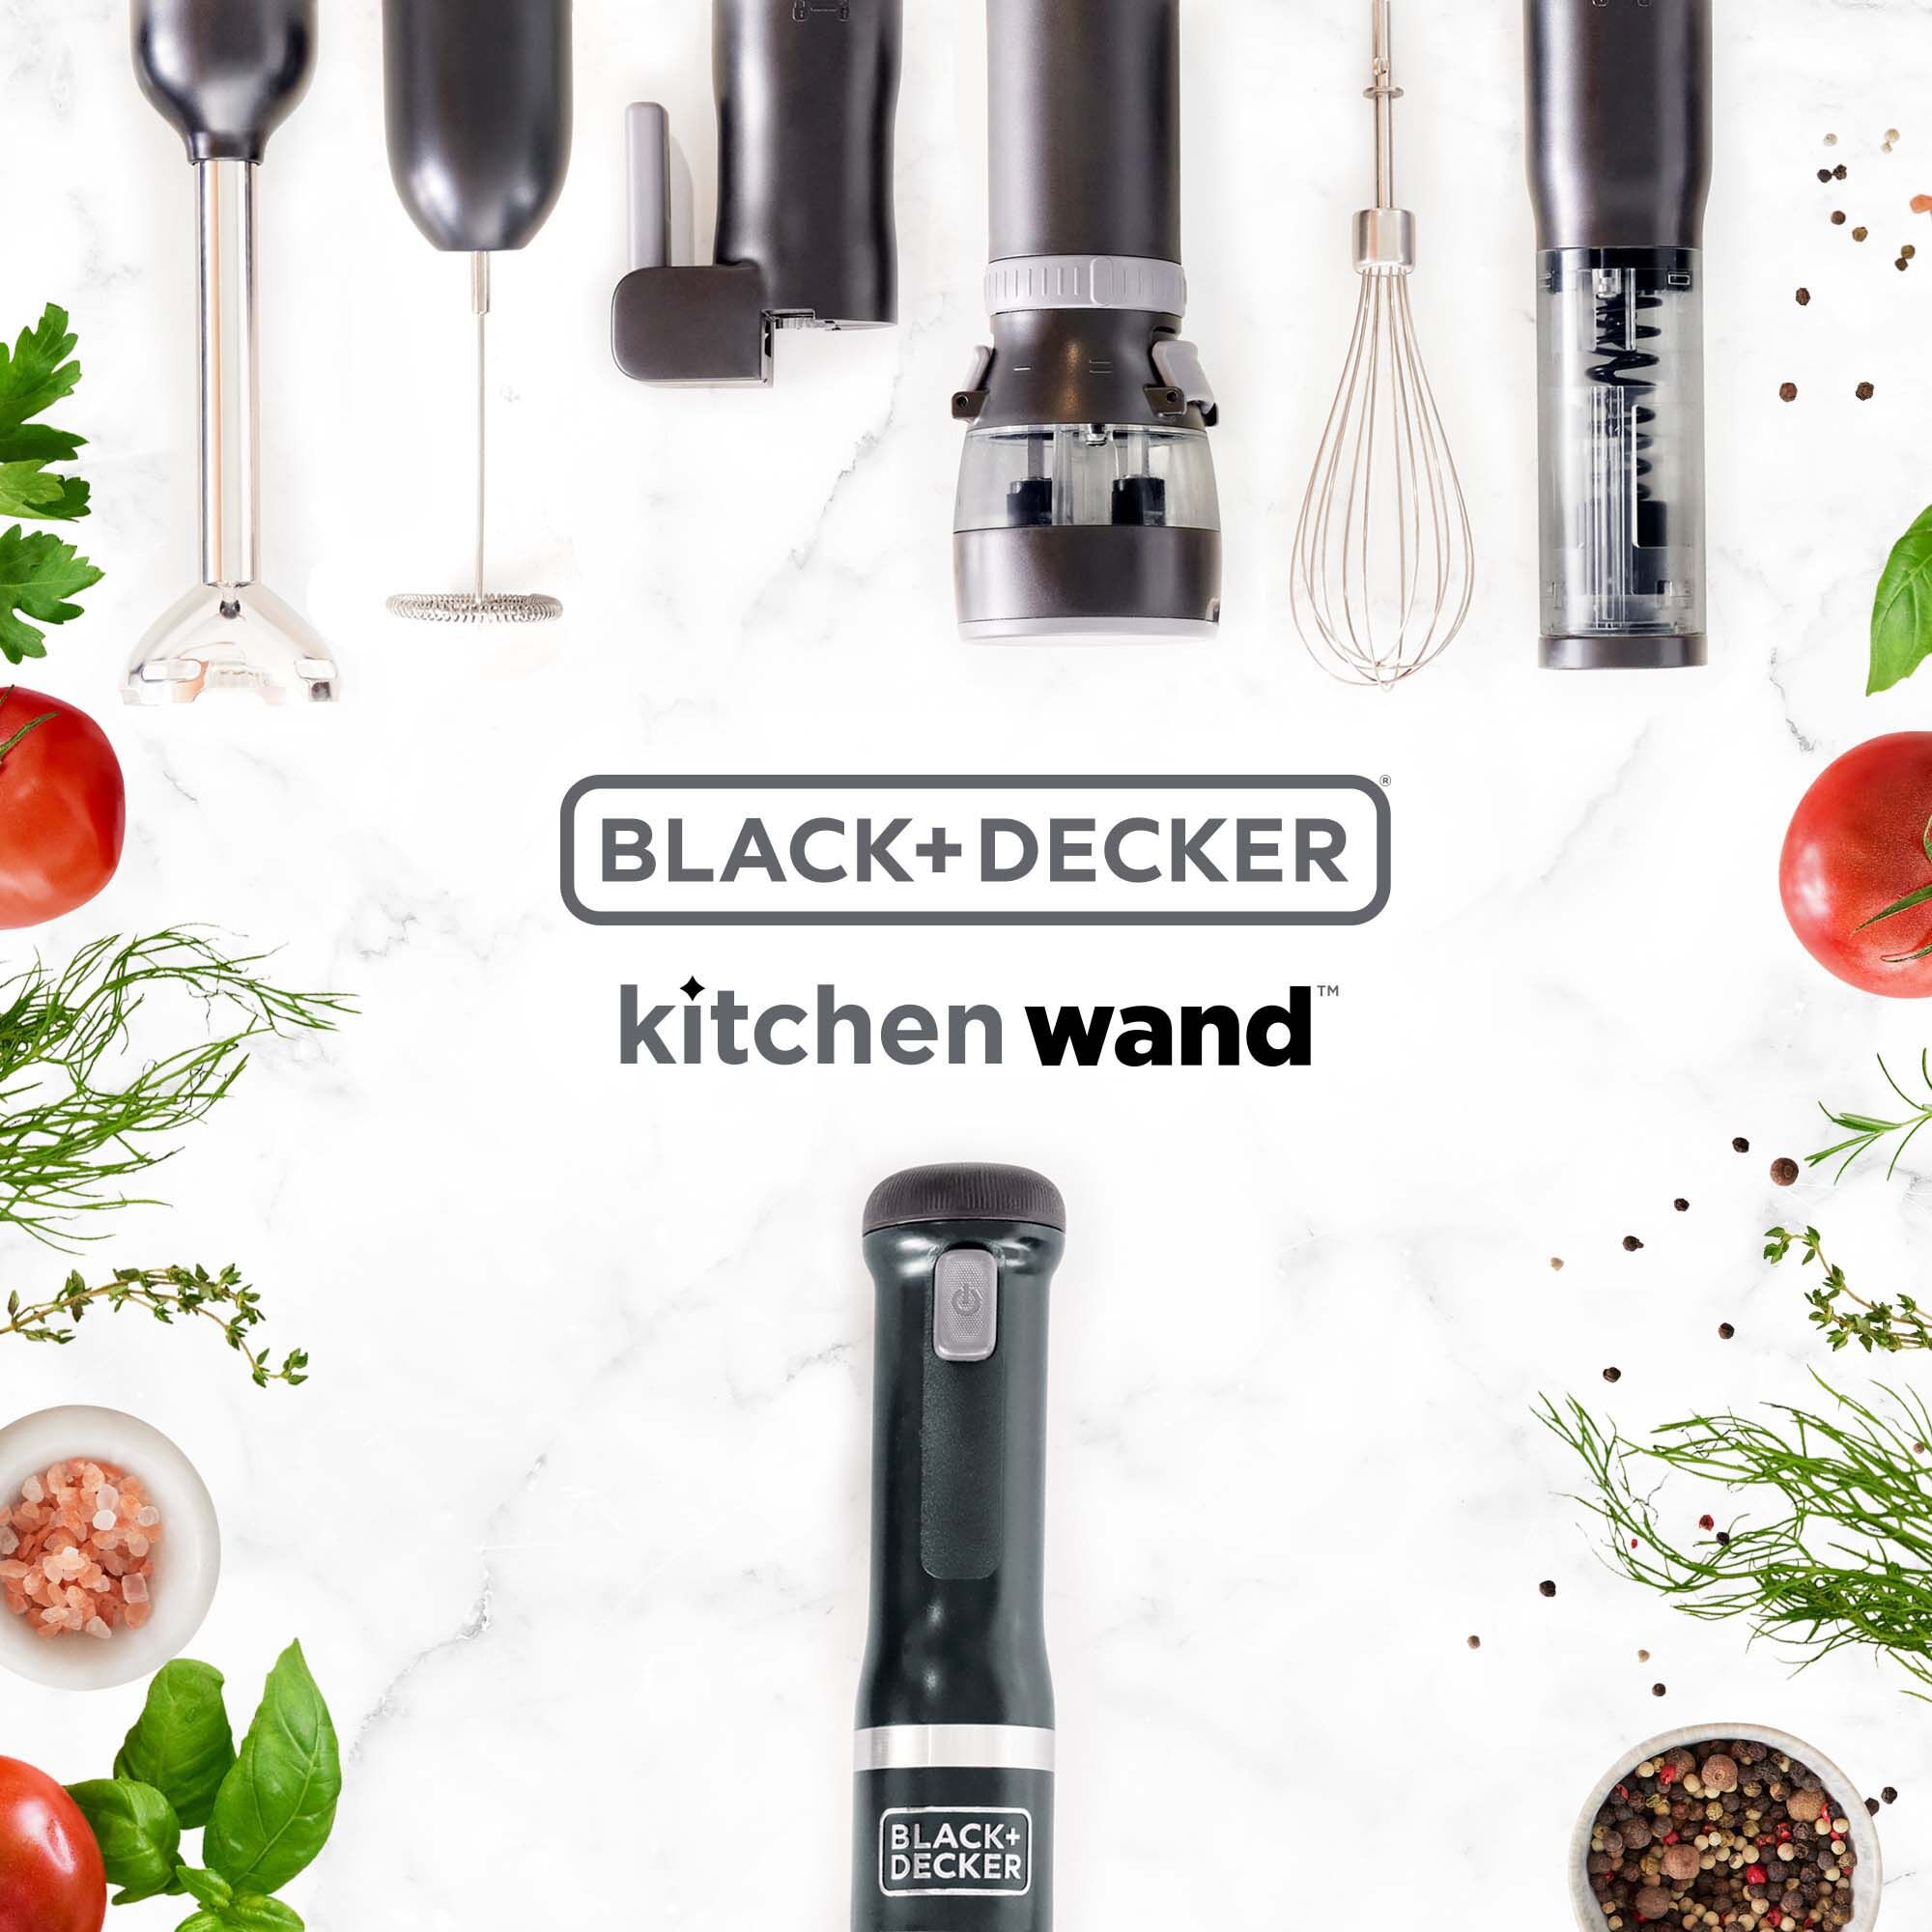 BLACK+DECKER Kitchen Wand Food Processor Attachment (BCKM101FP), 1